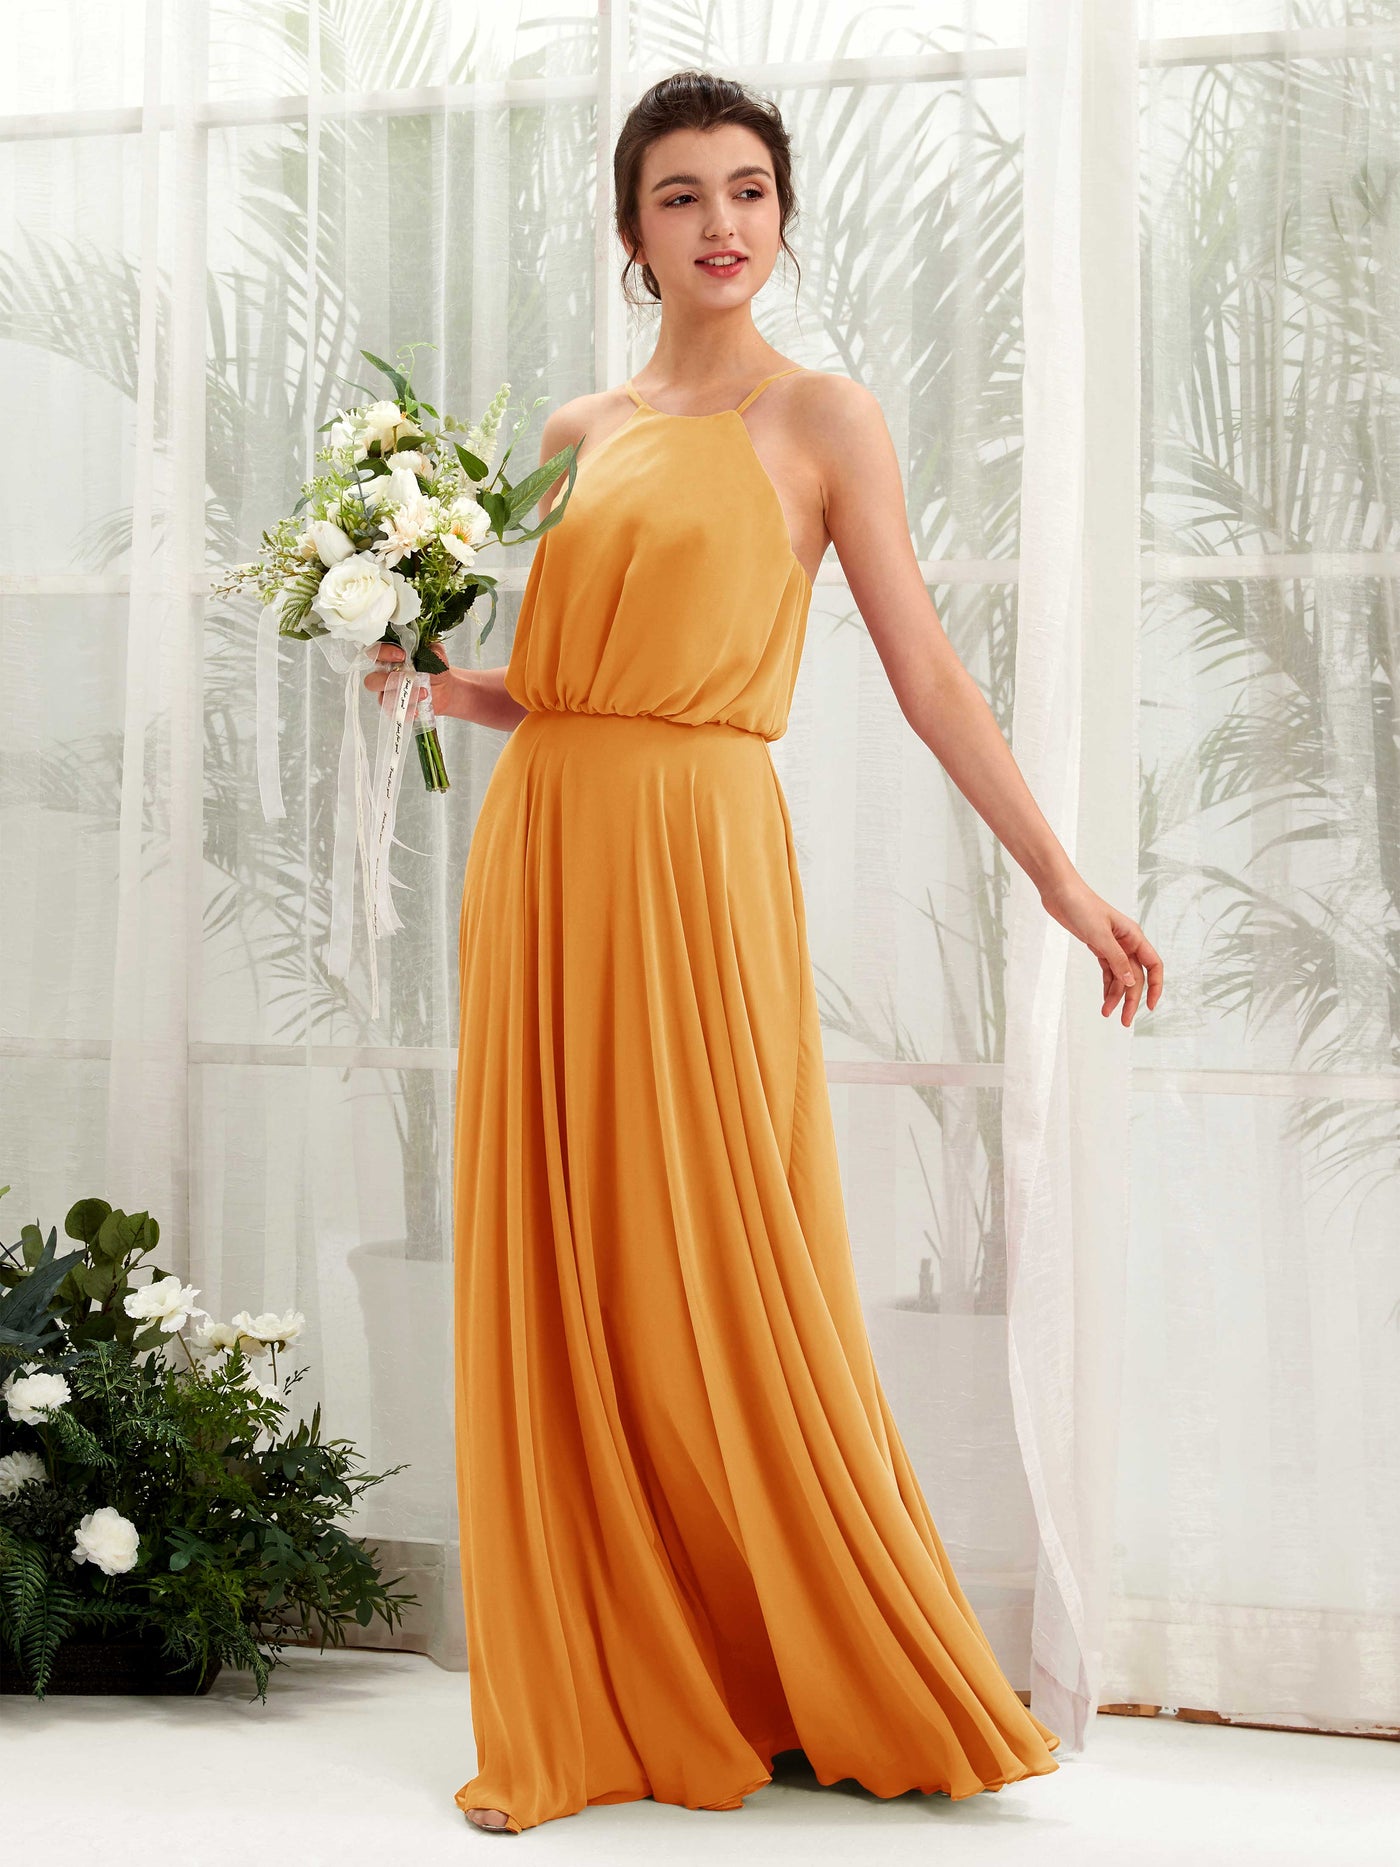 Mango Bridesmaid Dresses Bridesmaid Dress Ball Gown Chiffon Halter Full Length Sleeveless Wedding Party Dress (81223402)#color_mango